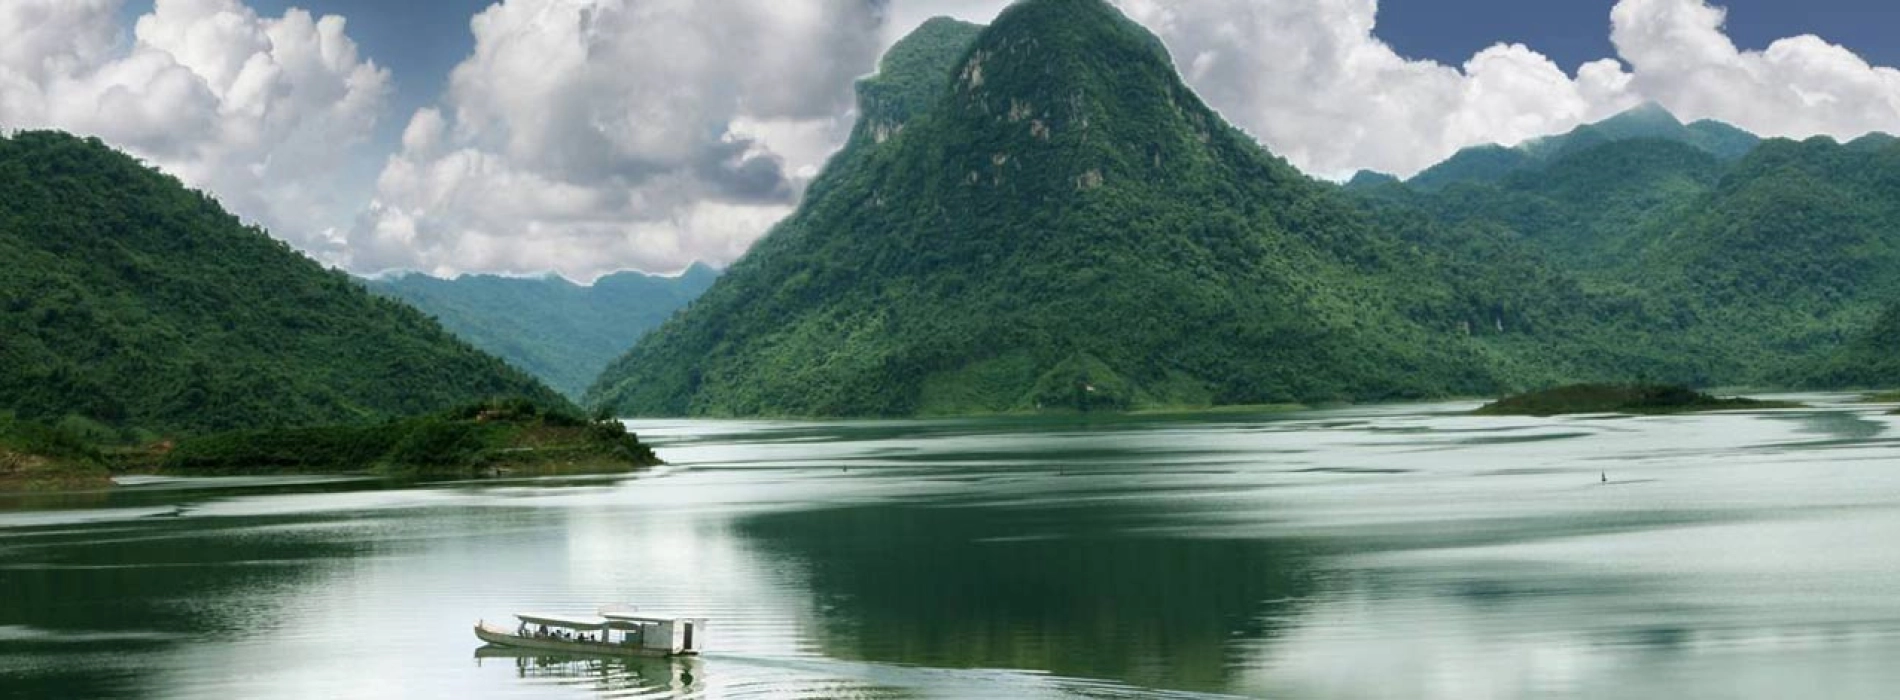 Pa Khoang Lake